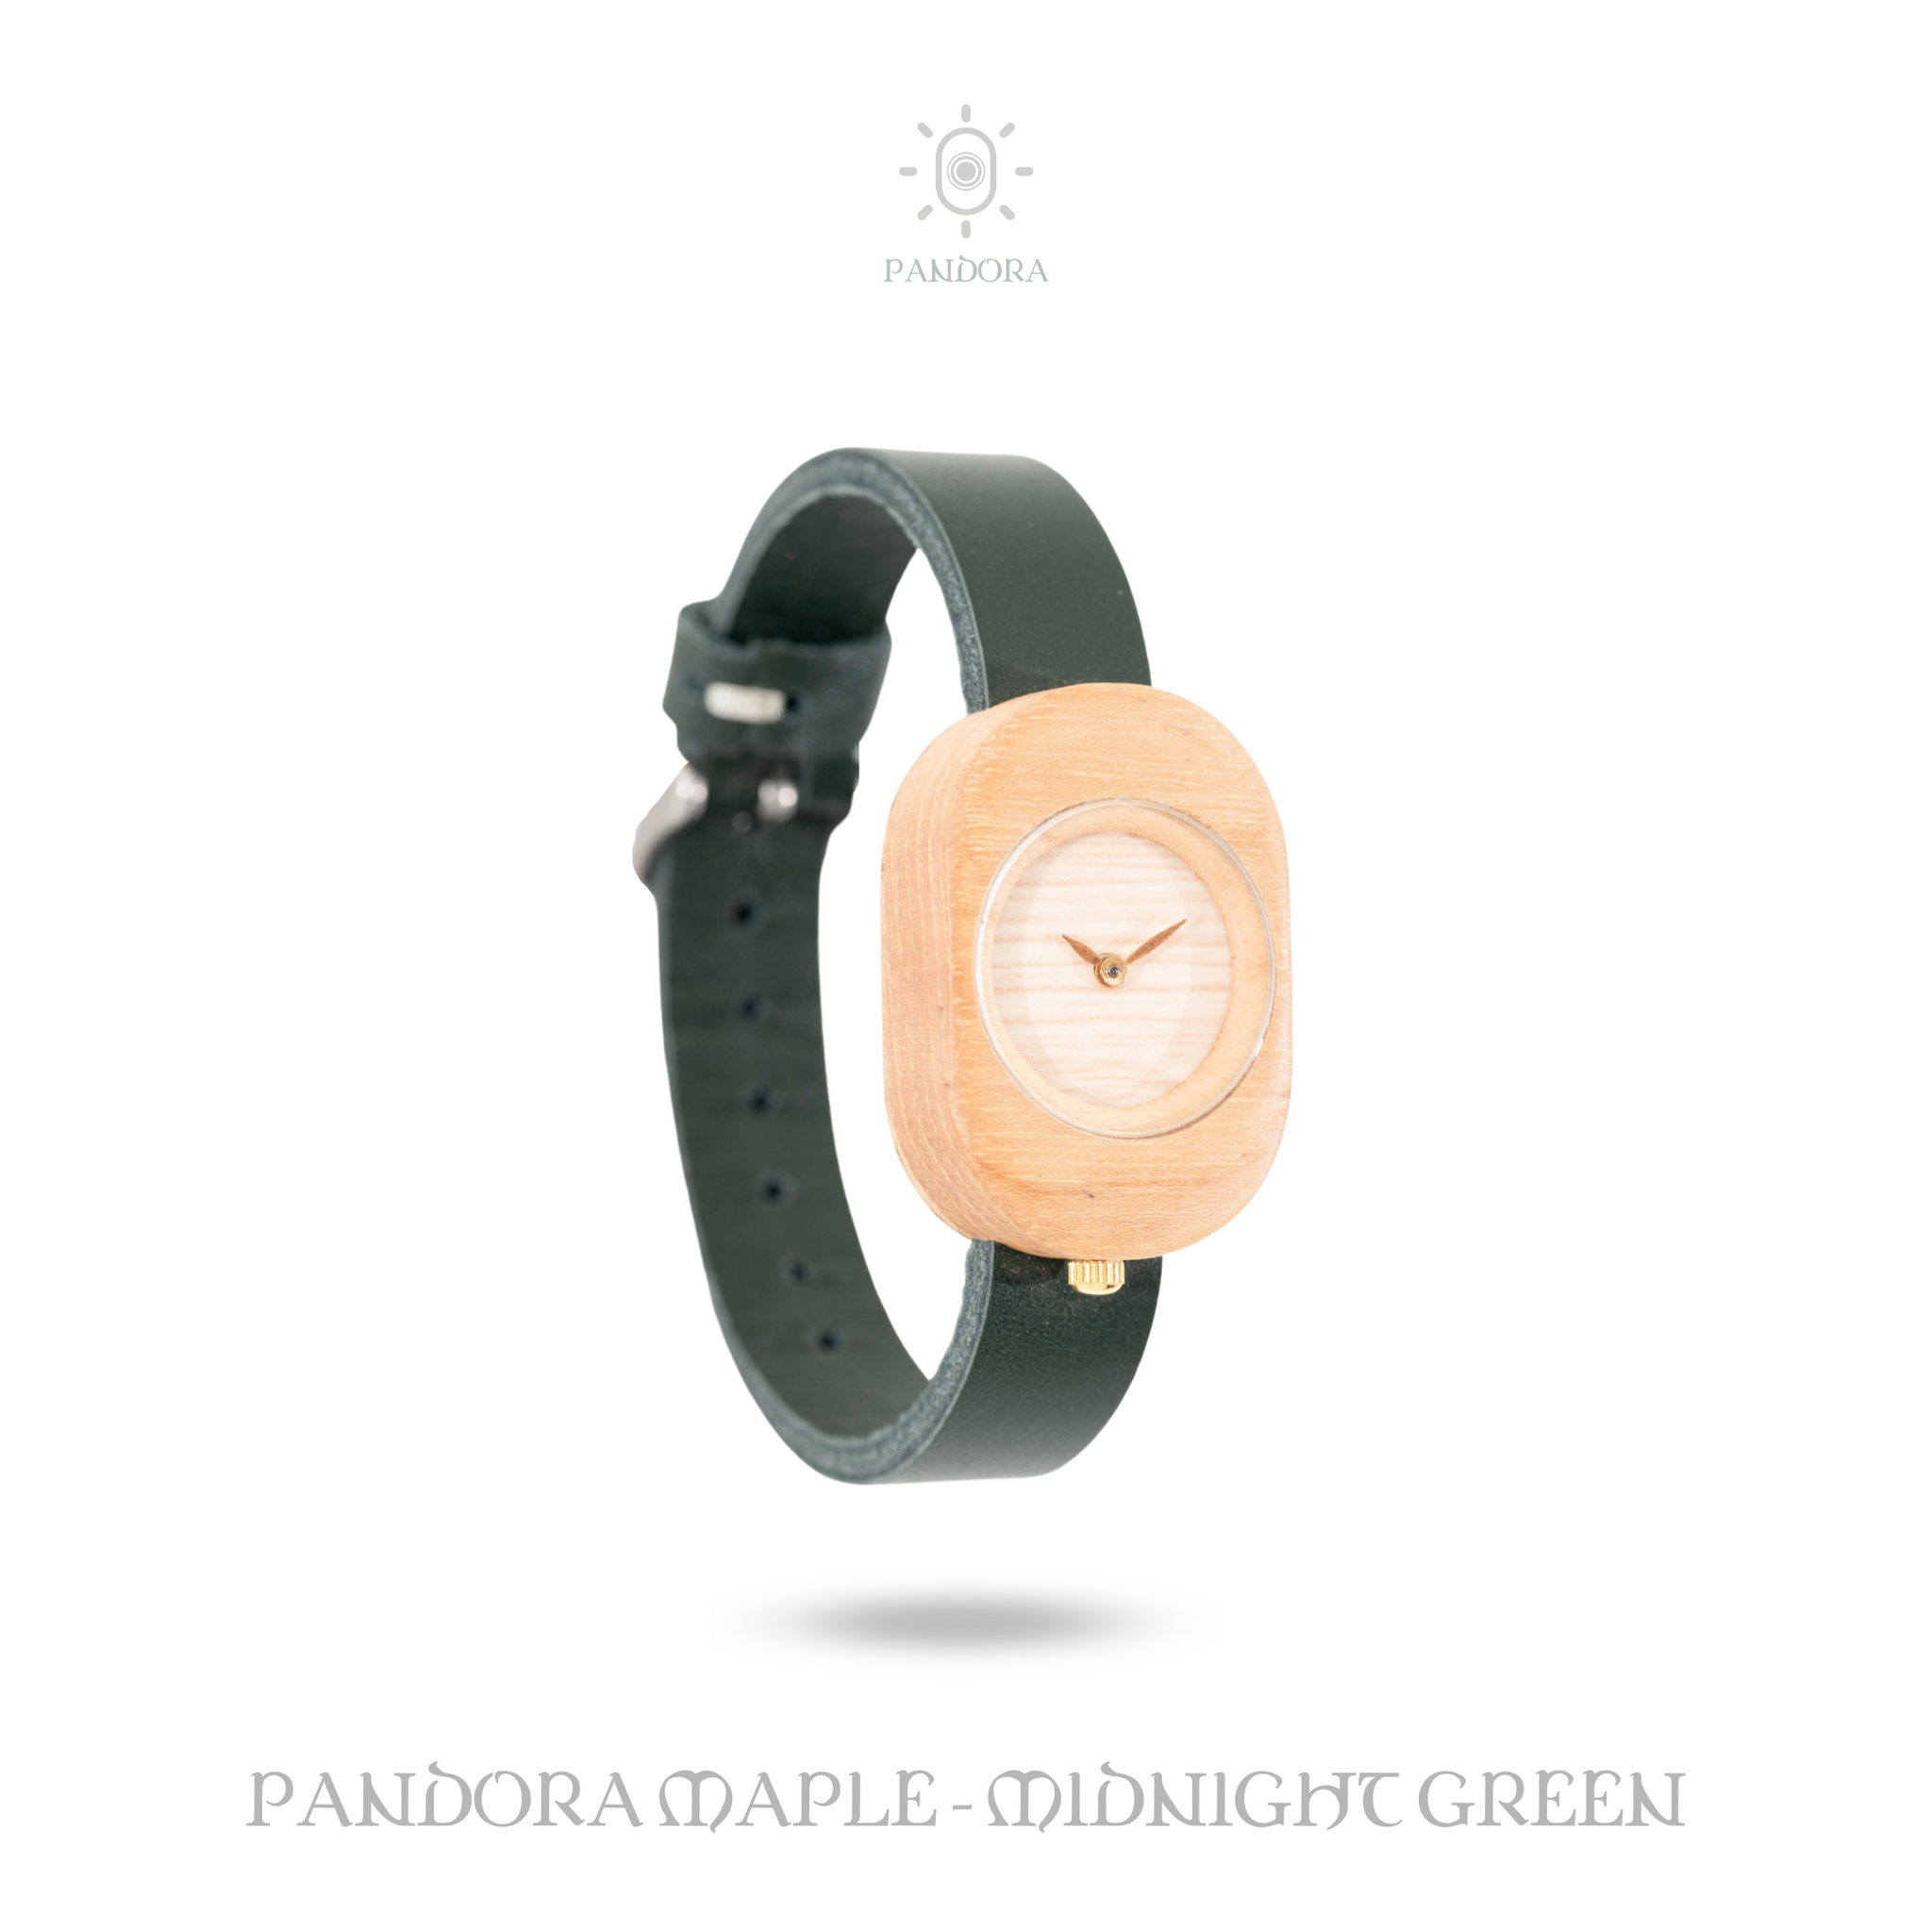 Eboni Pandora Maple - Midnight Green